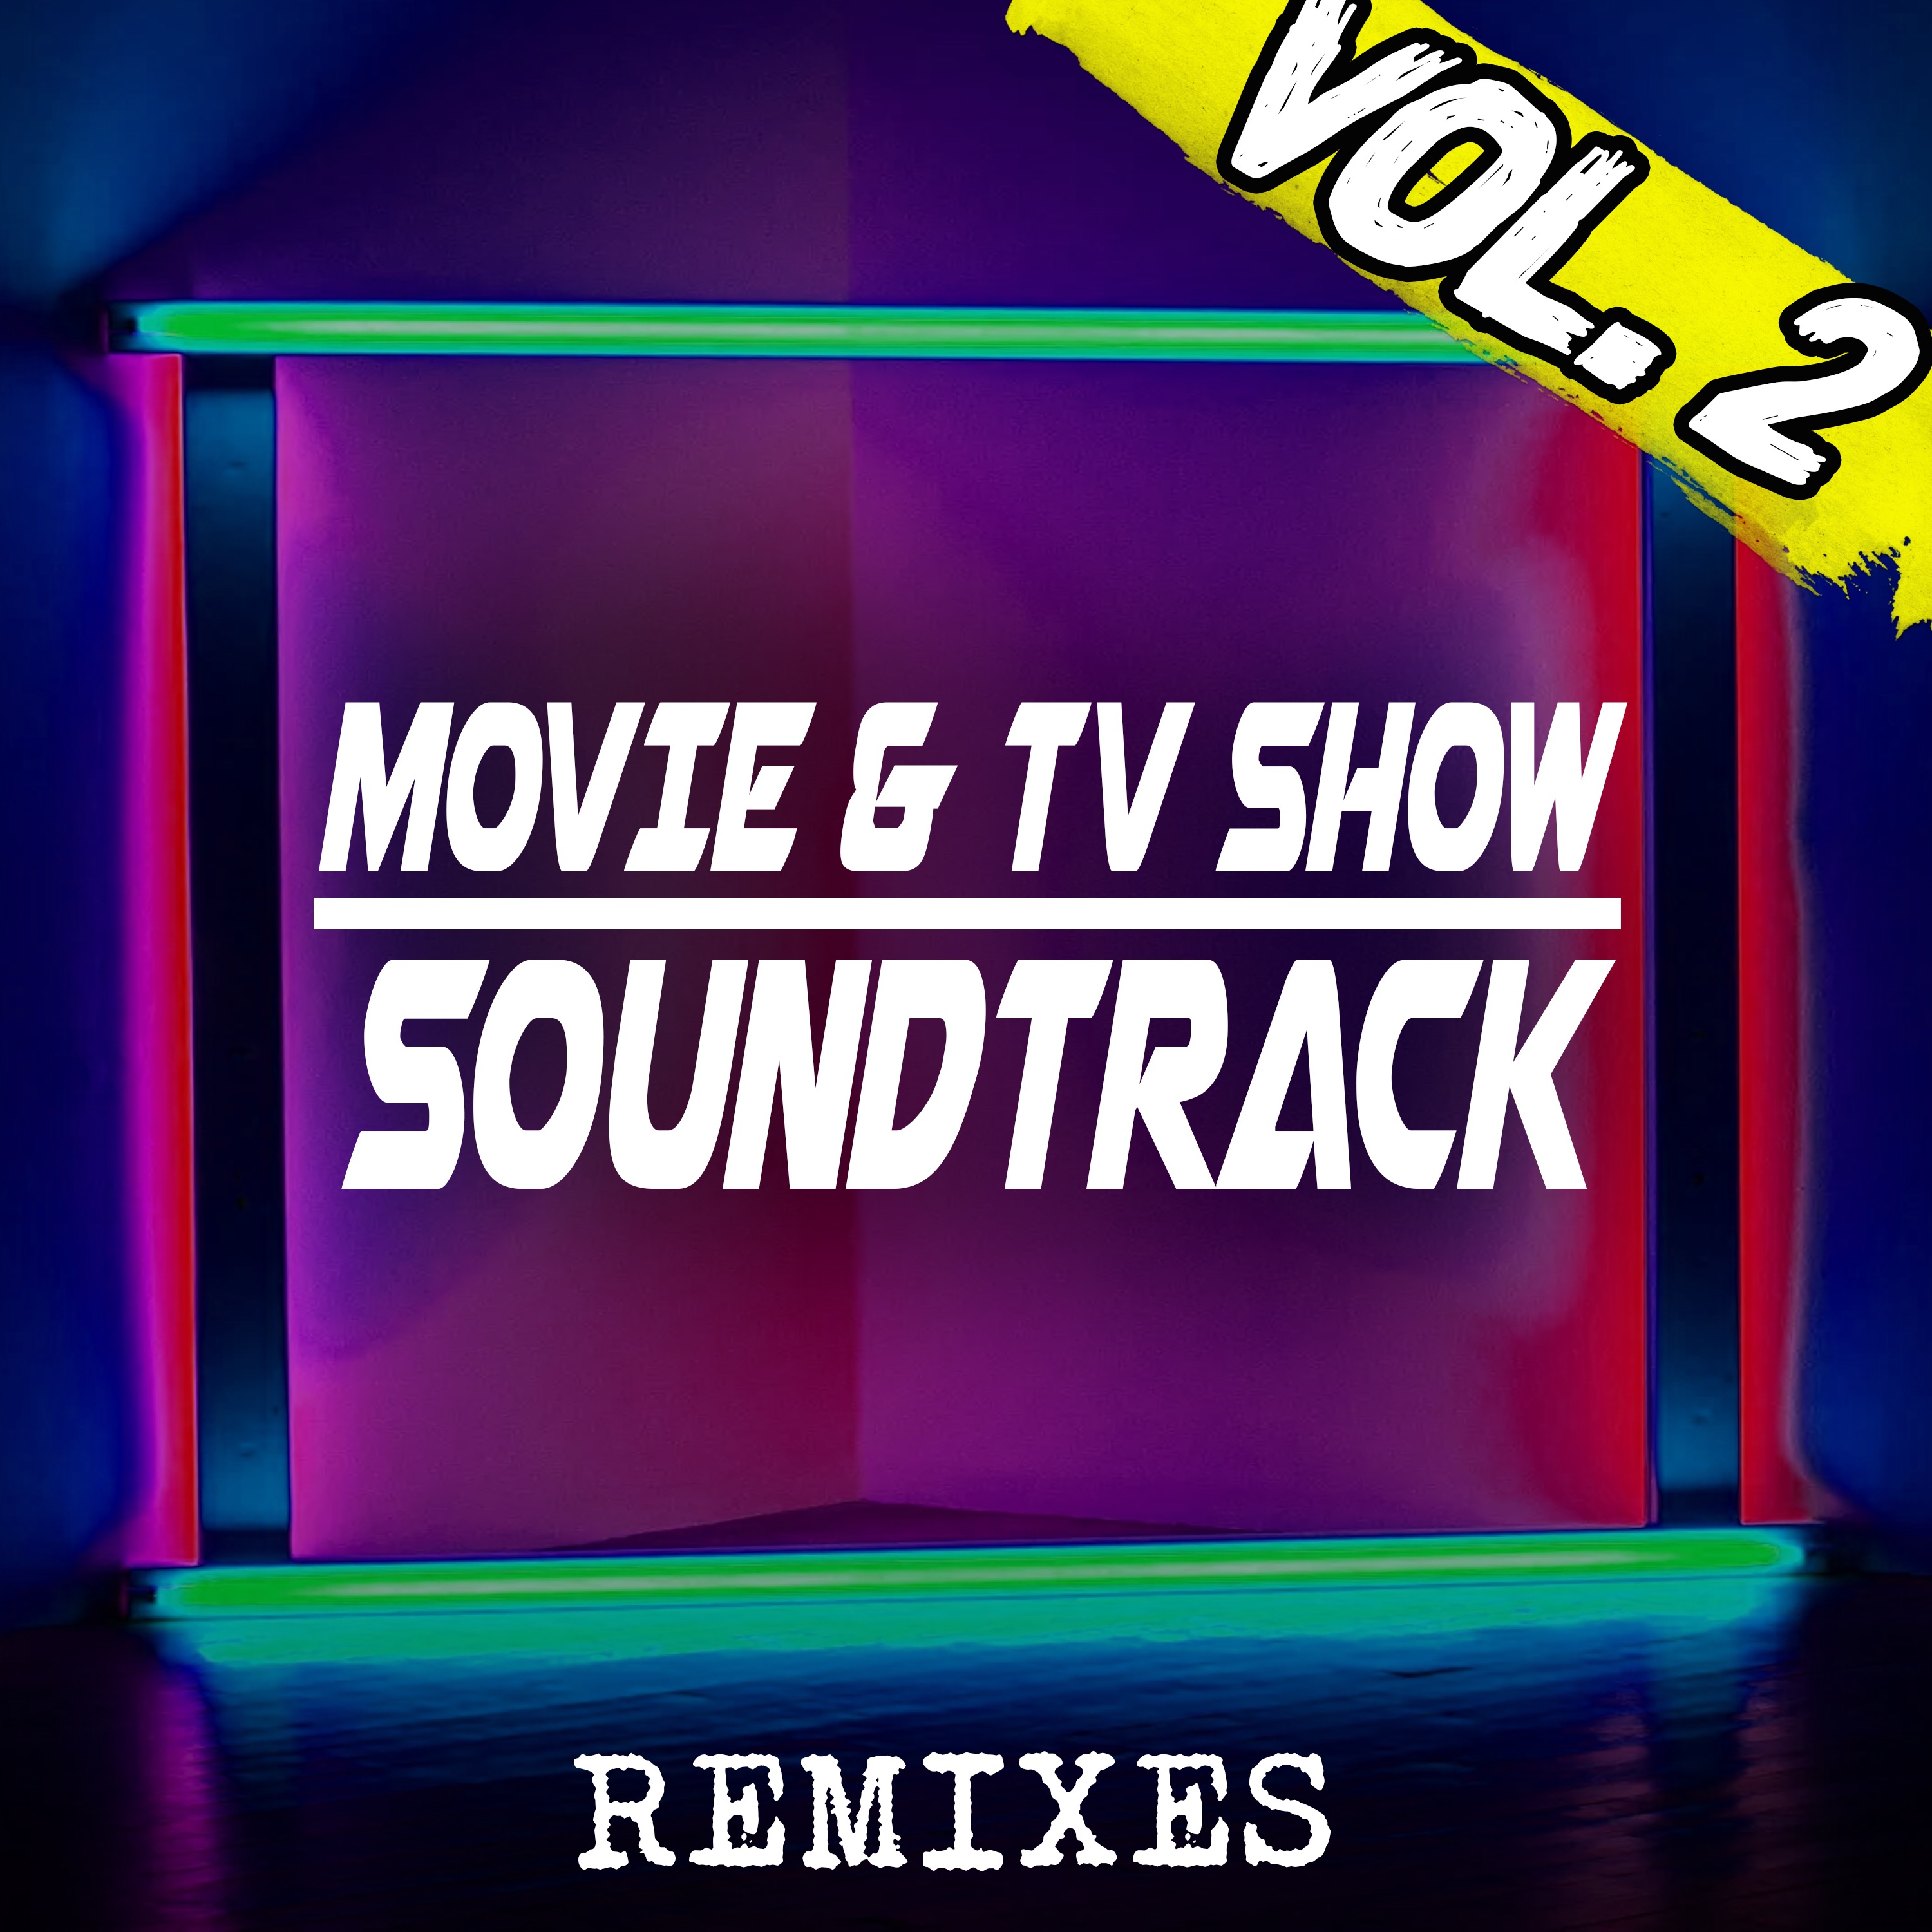 Soundtrack remix. The show (Soundtrack). Trap Zone. Nature 1 Theme Soundtrack and Remixes.